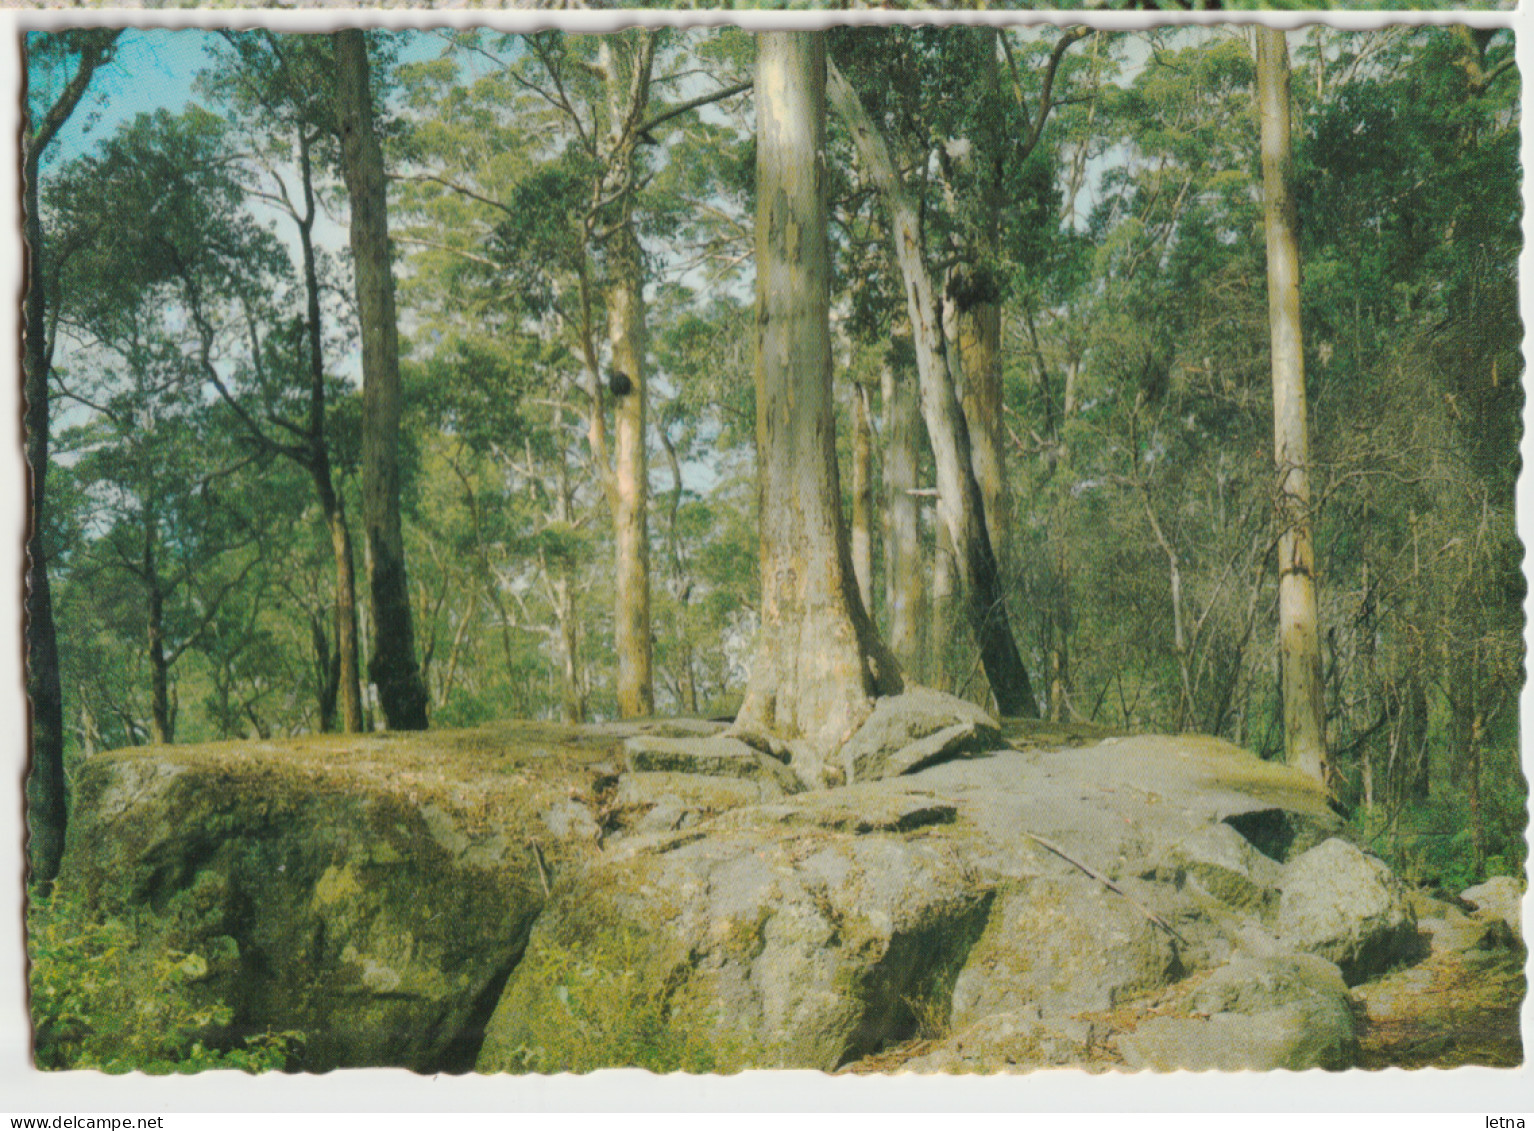 WESTERN AUSTRALIA WA Tree in Rock PORONGORUPS Murray Views W15 postcard c1970s